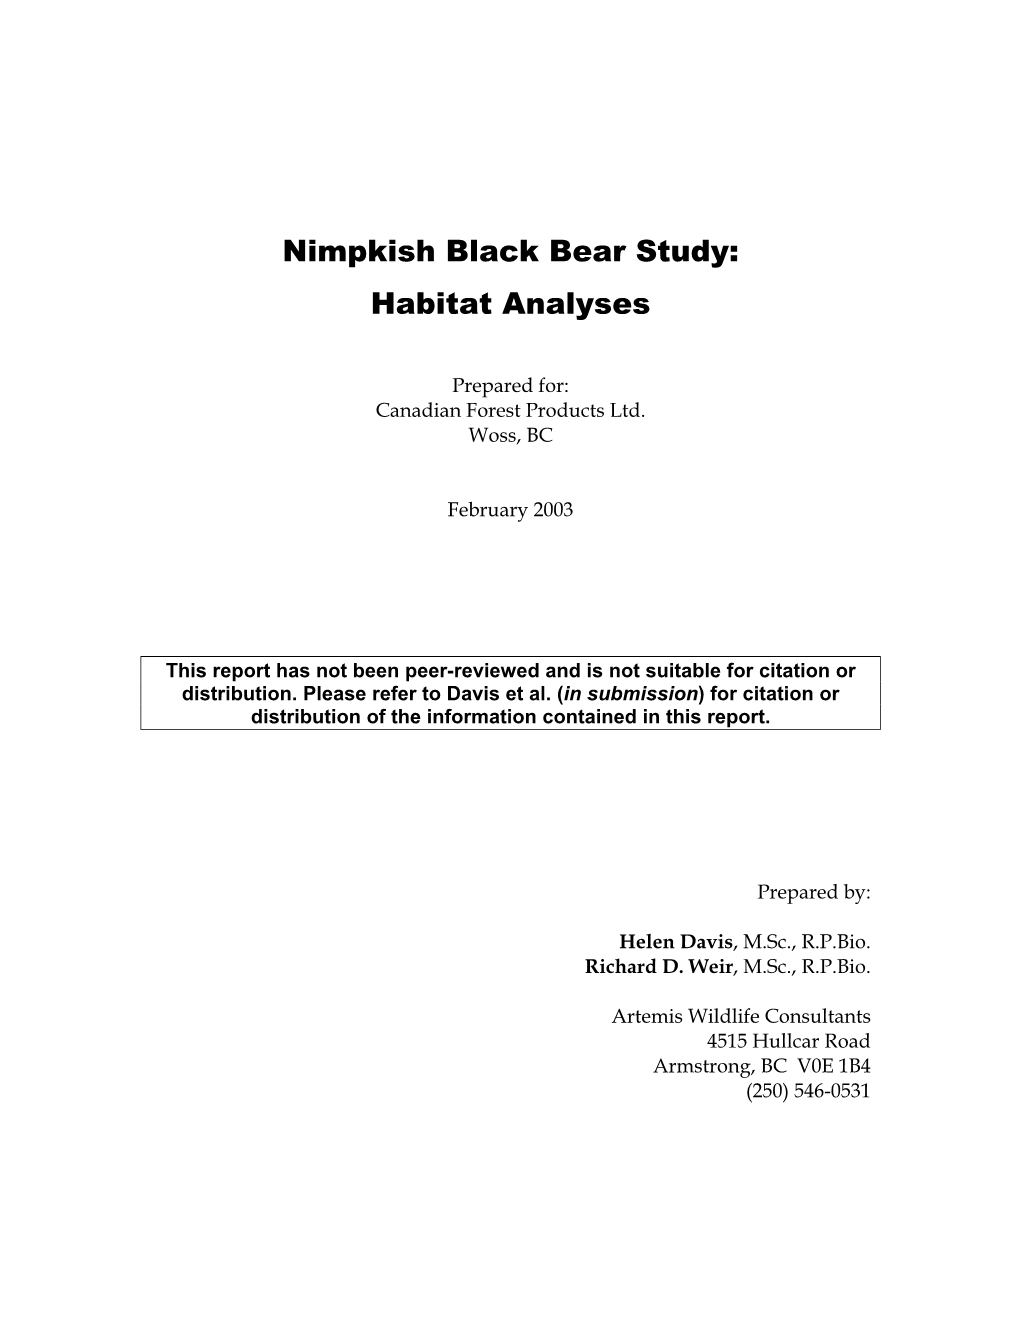 Nimpkish Black Bear Study: Habitat Analyses